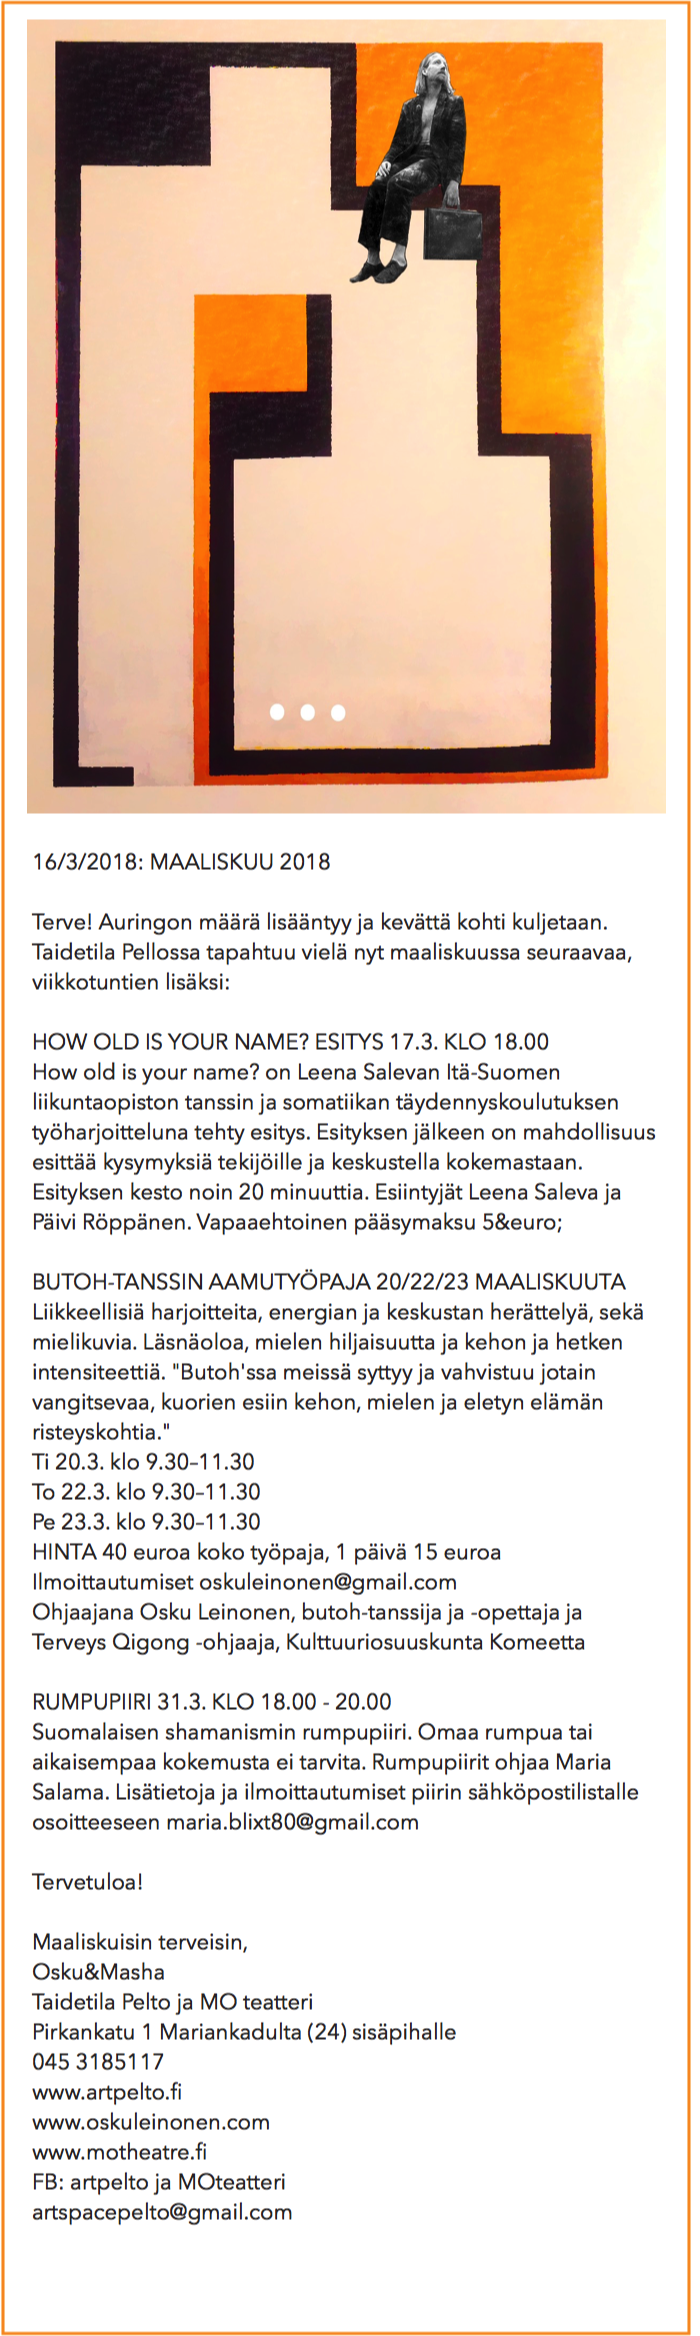 16/3/2017 Taidetila Pellon ja MO teatterin Uutiskirje: Maaliskuu, Butoh, How Old is Your Name ja Rumpupiiri